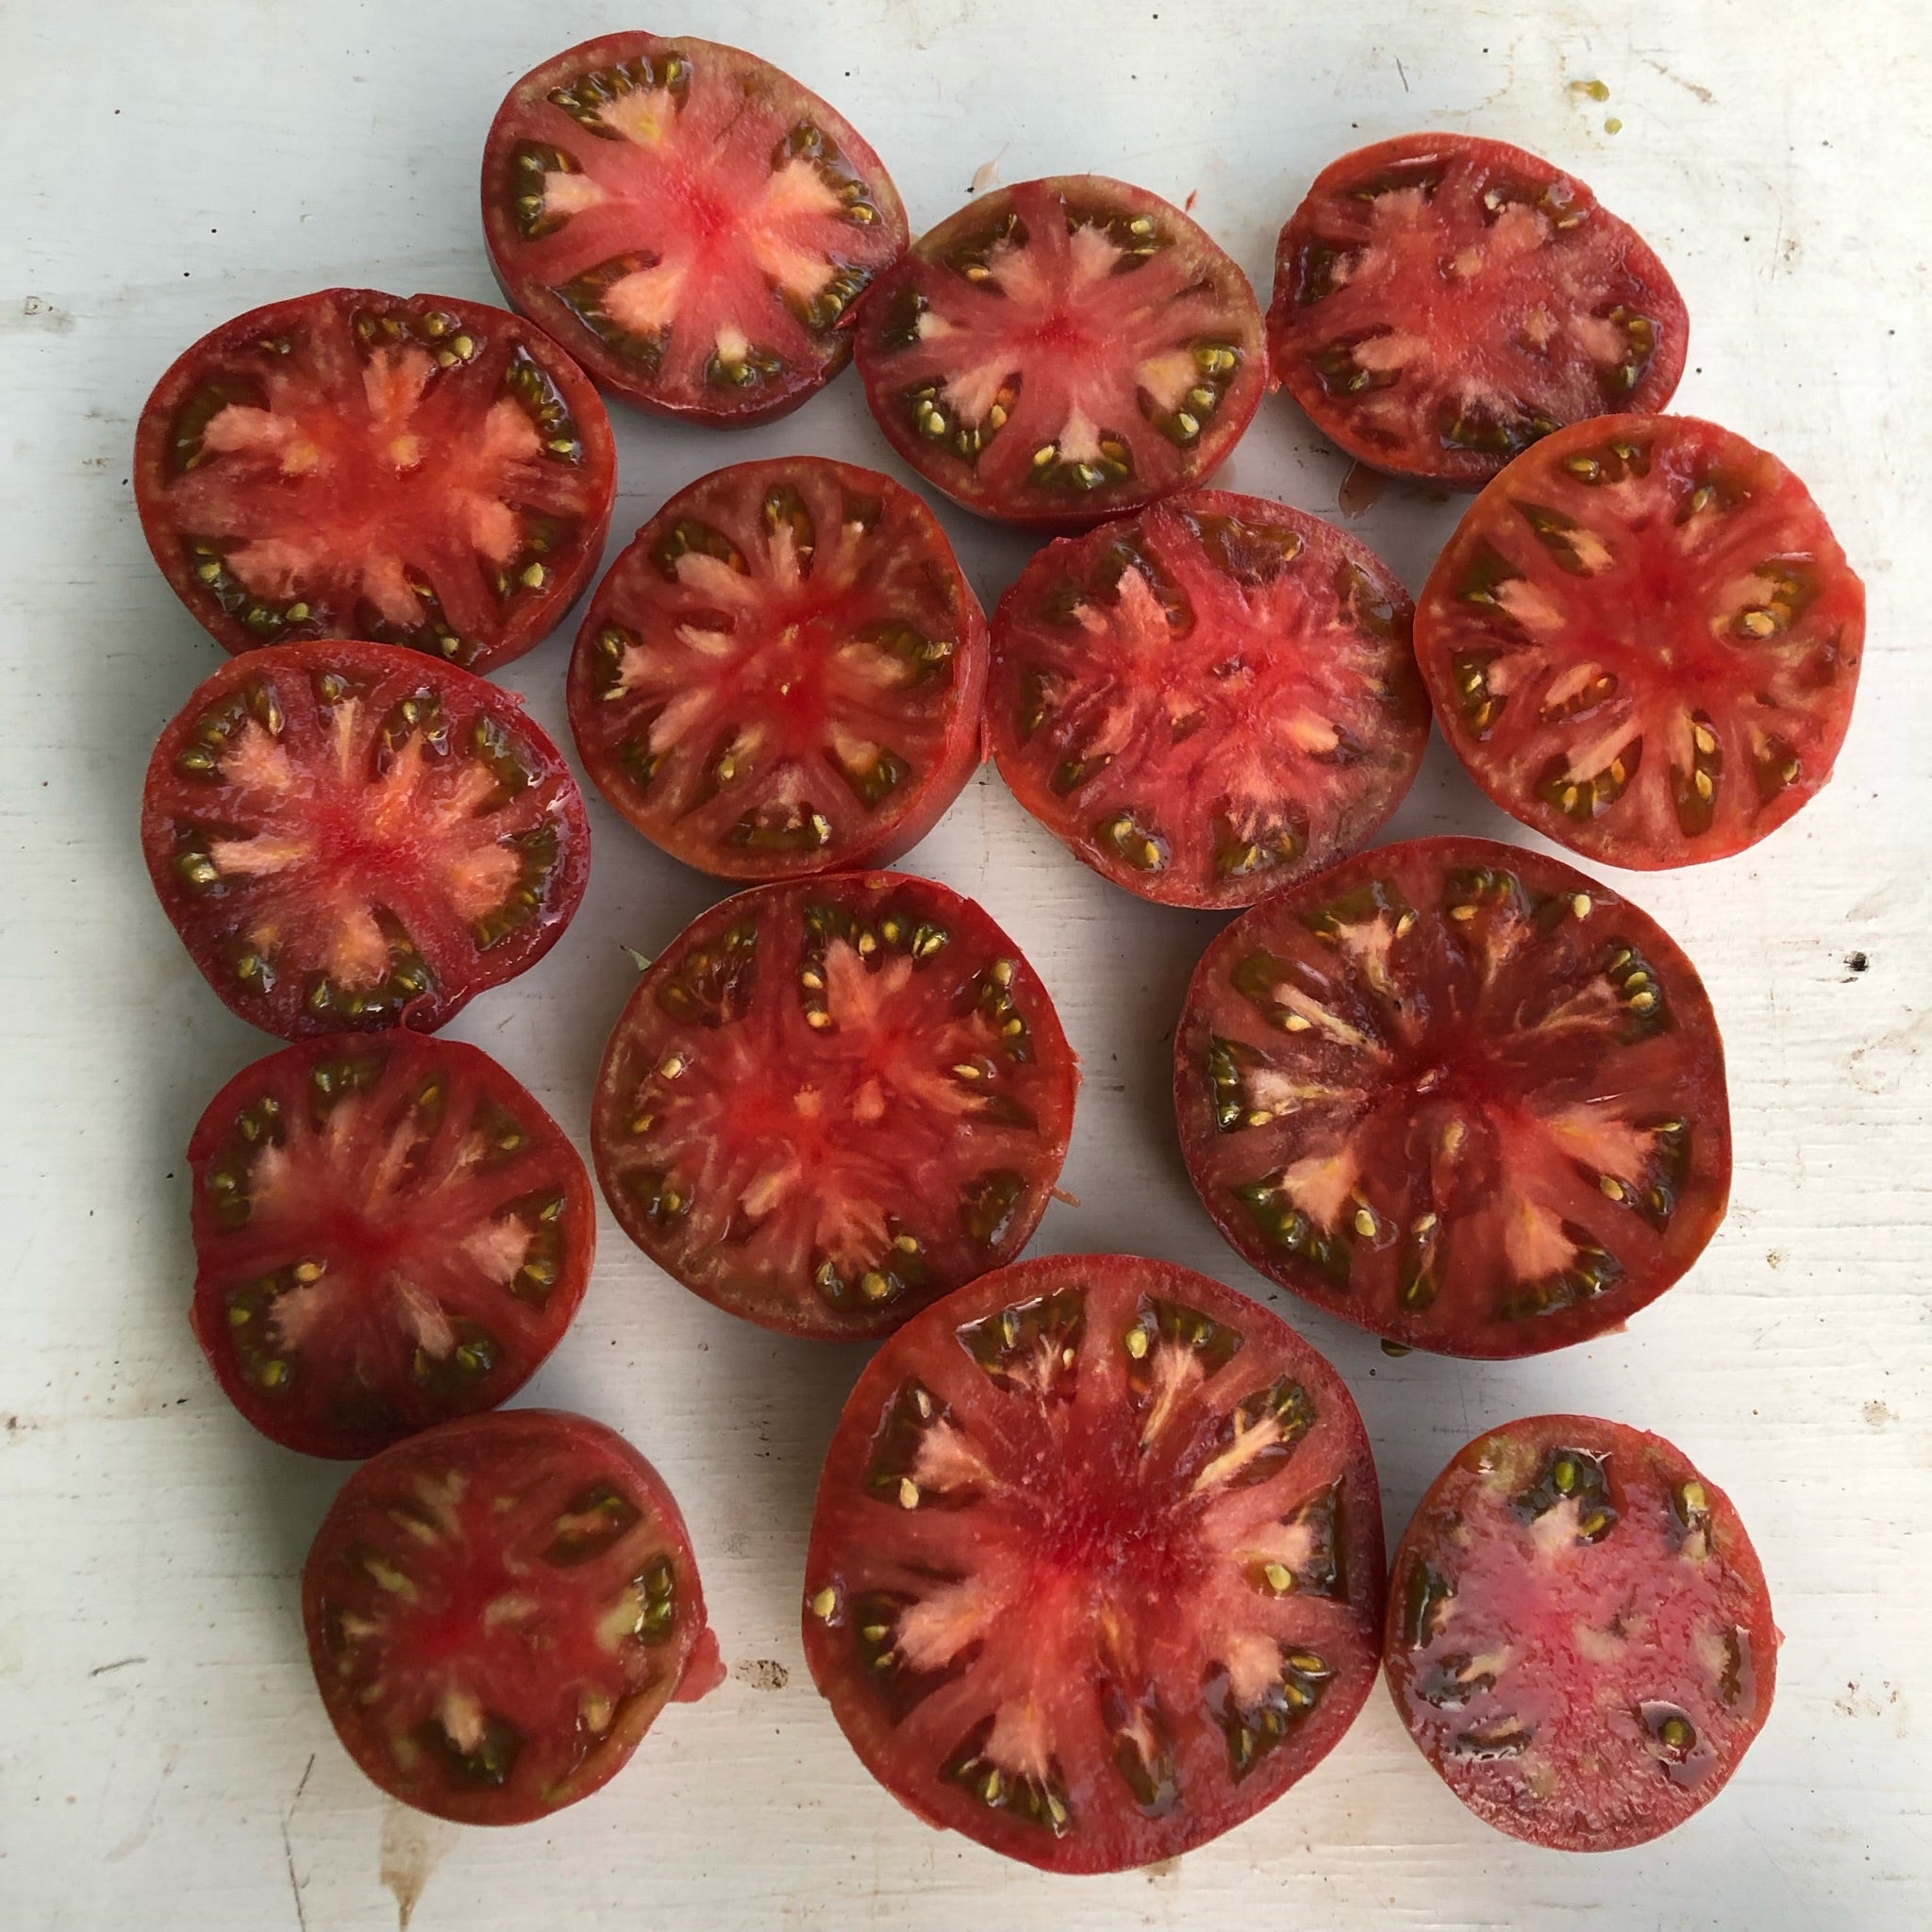 Byrka's Blue Tomato – Revival Seeds